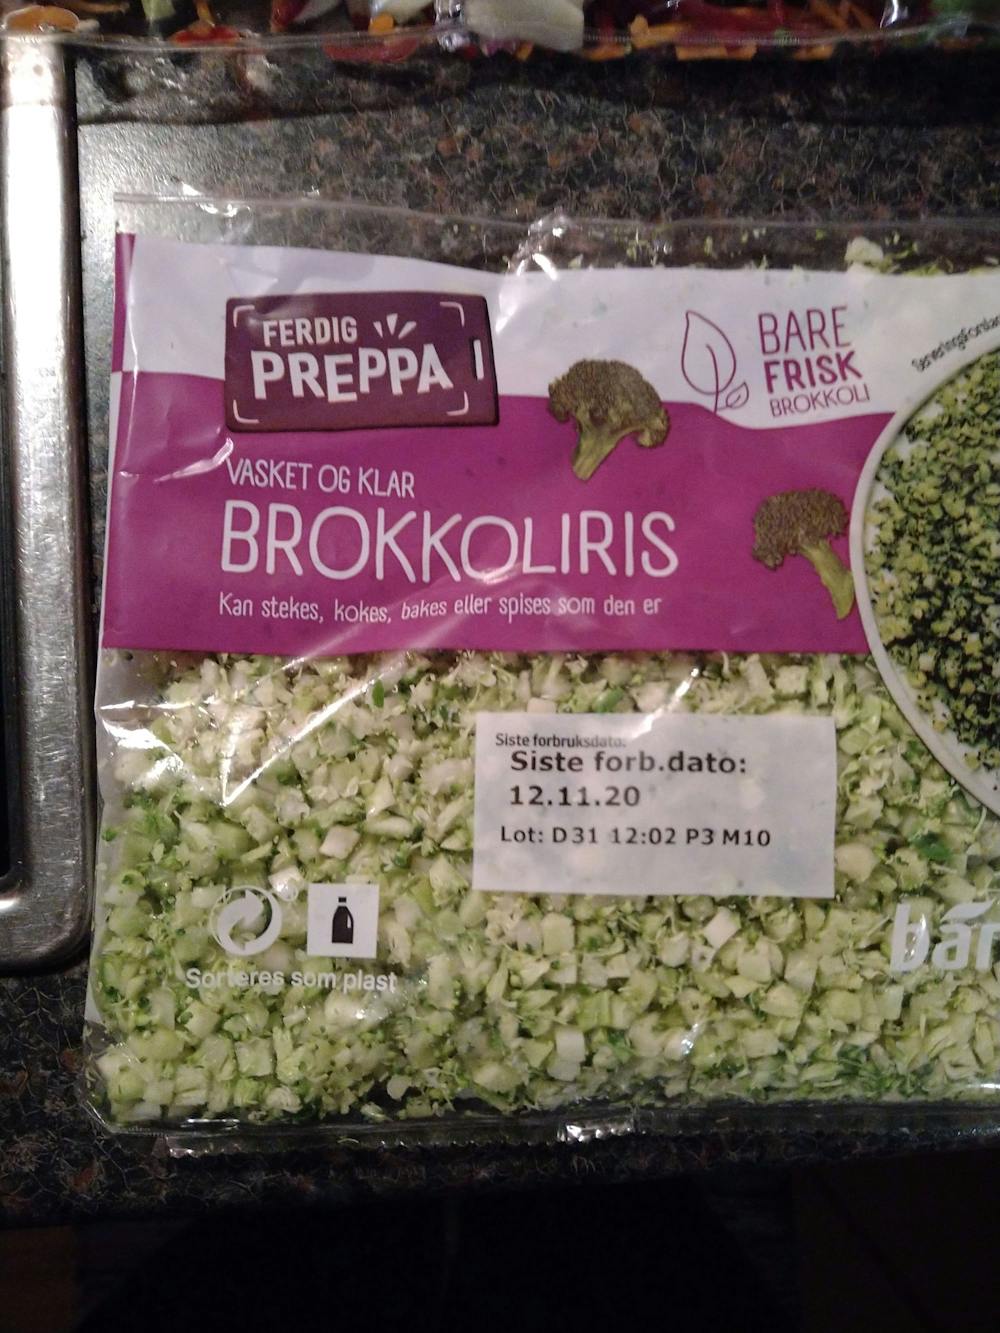 Brokkoliris, Ferdig preppa